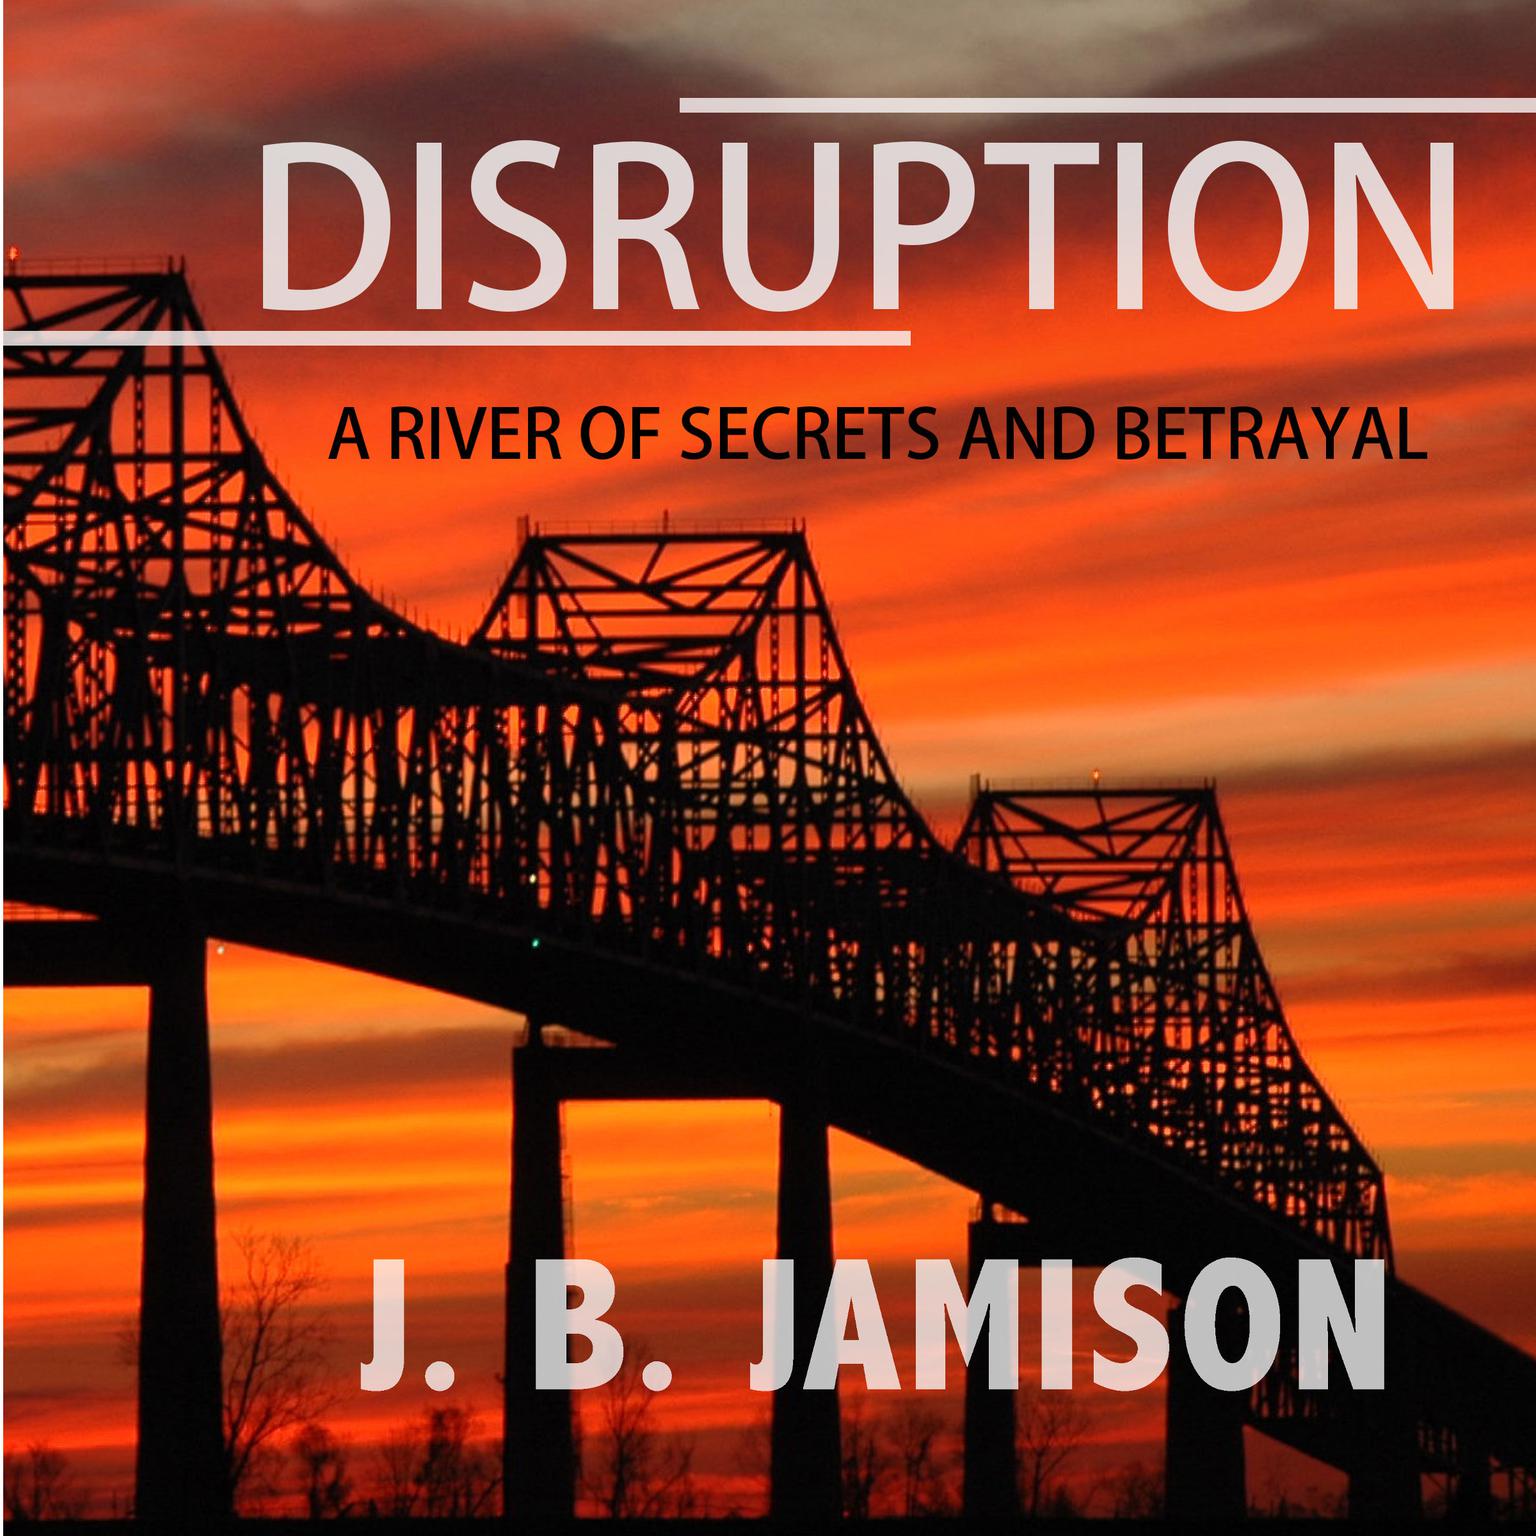 Disruption Audiobook, by J. B. Jamison